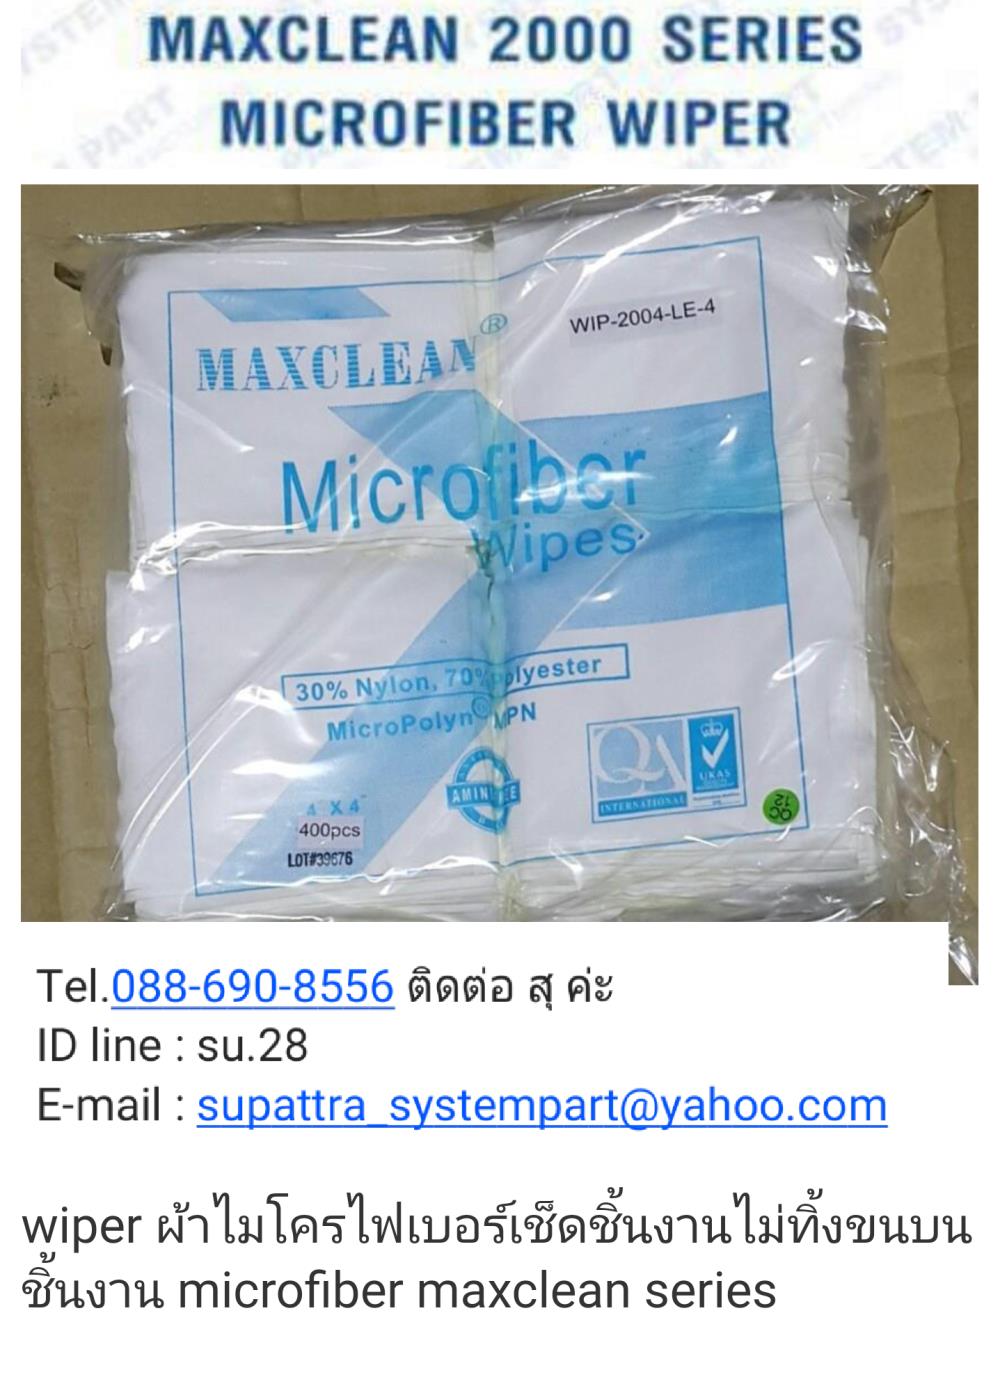 Maxclean 2000 Series Microfiber Wiper ผ้าไมโครไฟเบอร์เช็ดชิ้นงานไม่ทิ้งขนบนชิ้นงาน,Maxclean 2000 Series Microfiber Wiper ผ้าไมโครไฟเบอร์เช็ดชิ้นงานไม่ทิ้งขนบนชิ้นงาน ผ้าคลีนรูม,Tel.088-690-8556 สุ Systempart,Automation and Electronics/Cleanroom Equipment